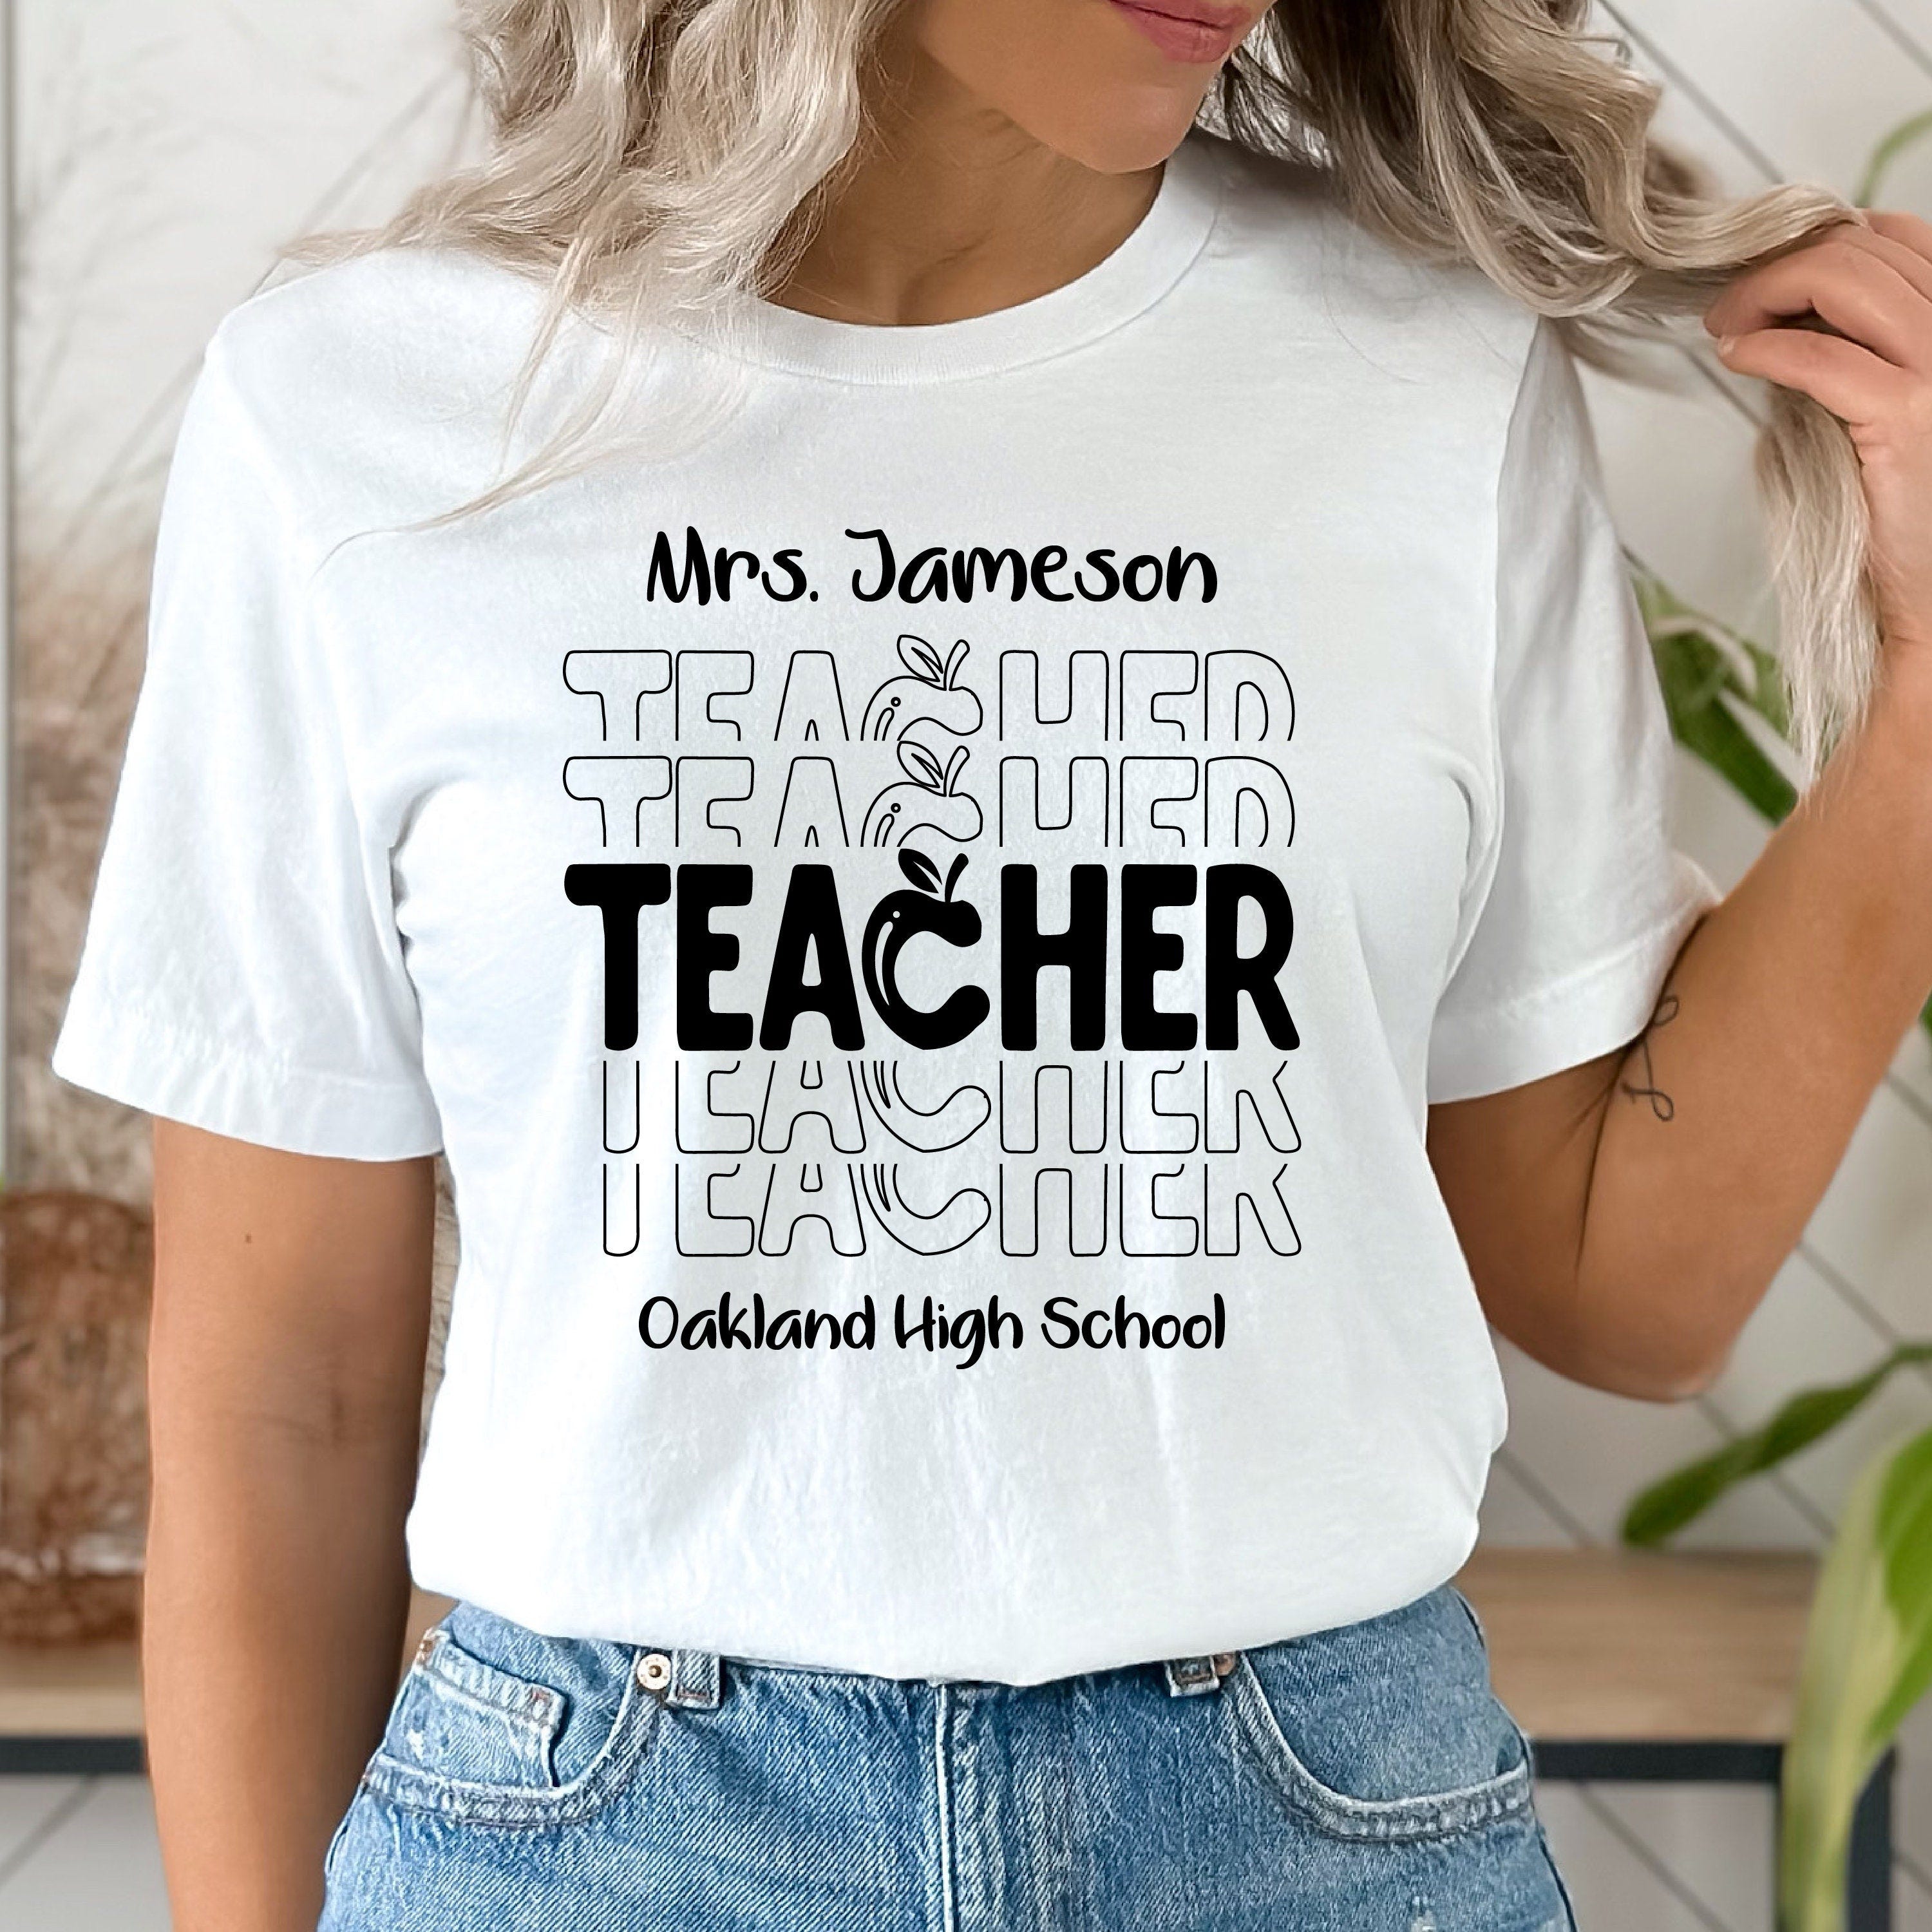 Personalized Teacher T Shirt Design with School Name - Teacher SVG Cutting Files for Cricut, Silhouette, Glowforge- Teacher Appreciation Day